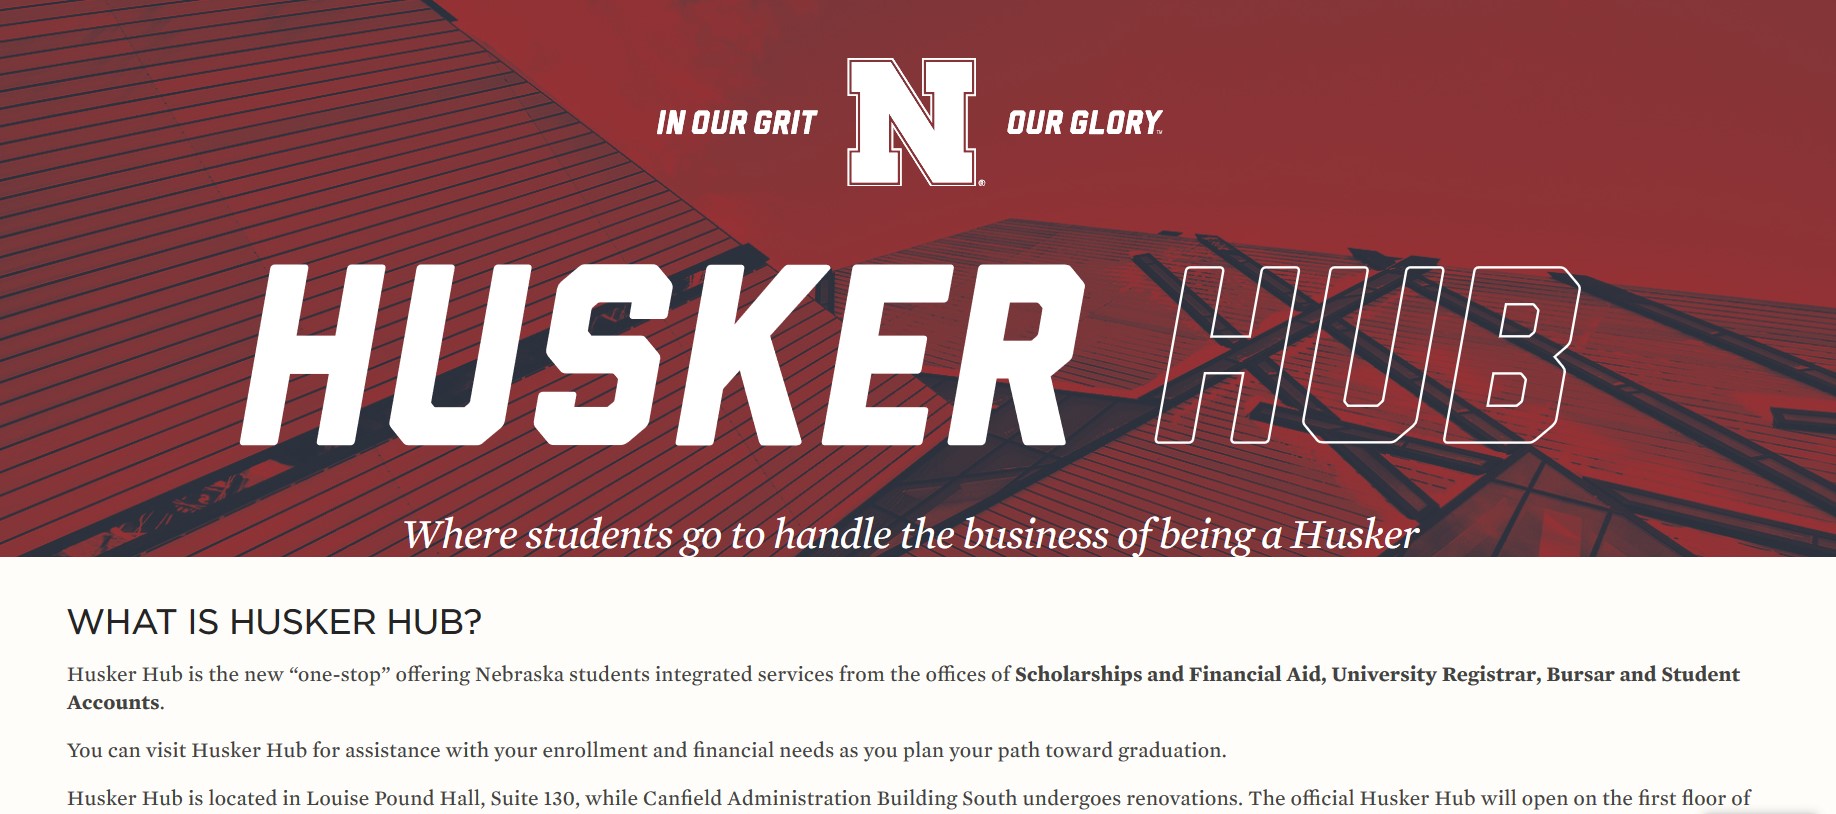 The Husker Hub